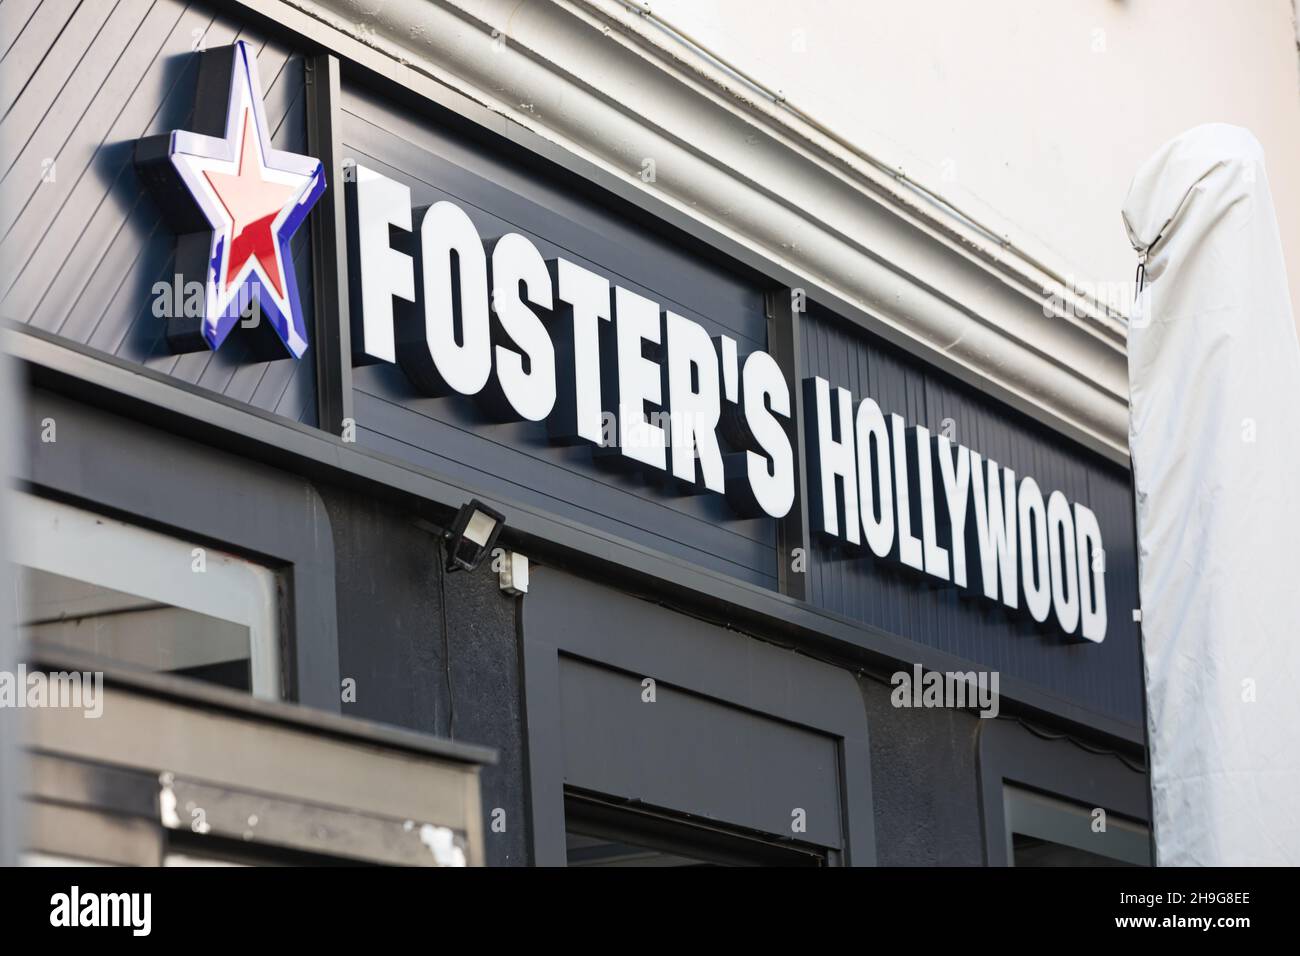 Madrid, Spain - December 06, 2021: Foster Hollywood restaurant exterior sign. Stock Photo